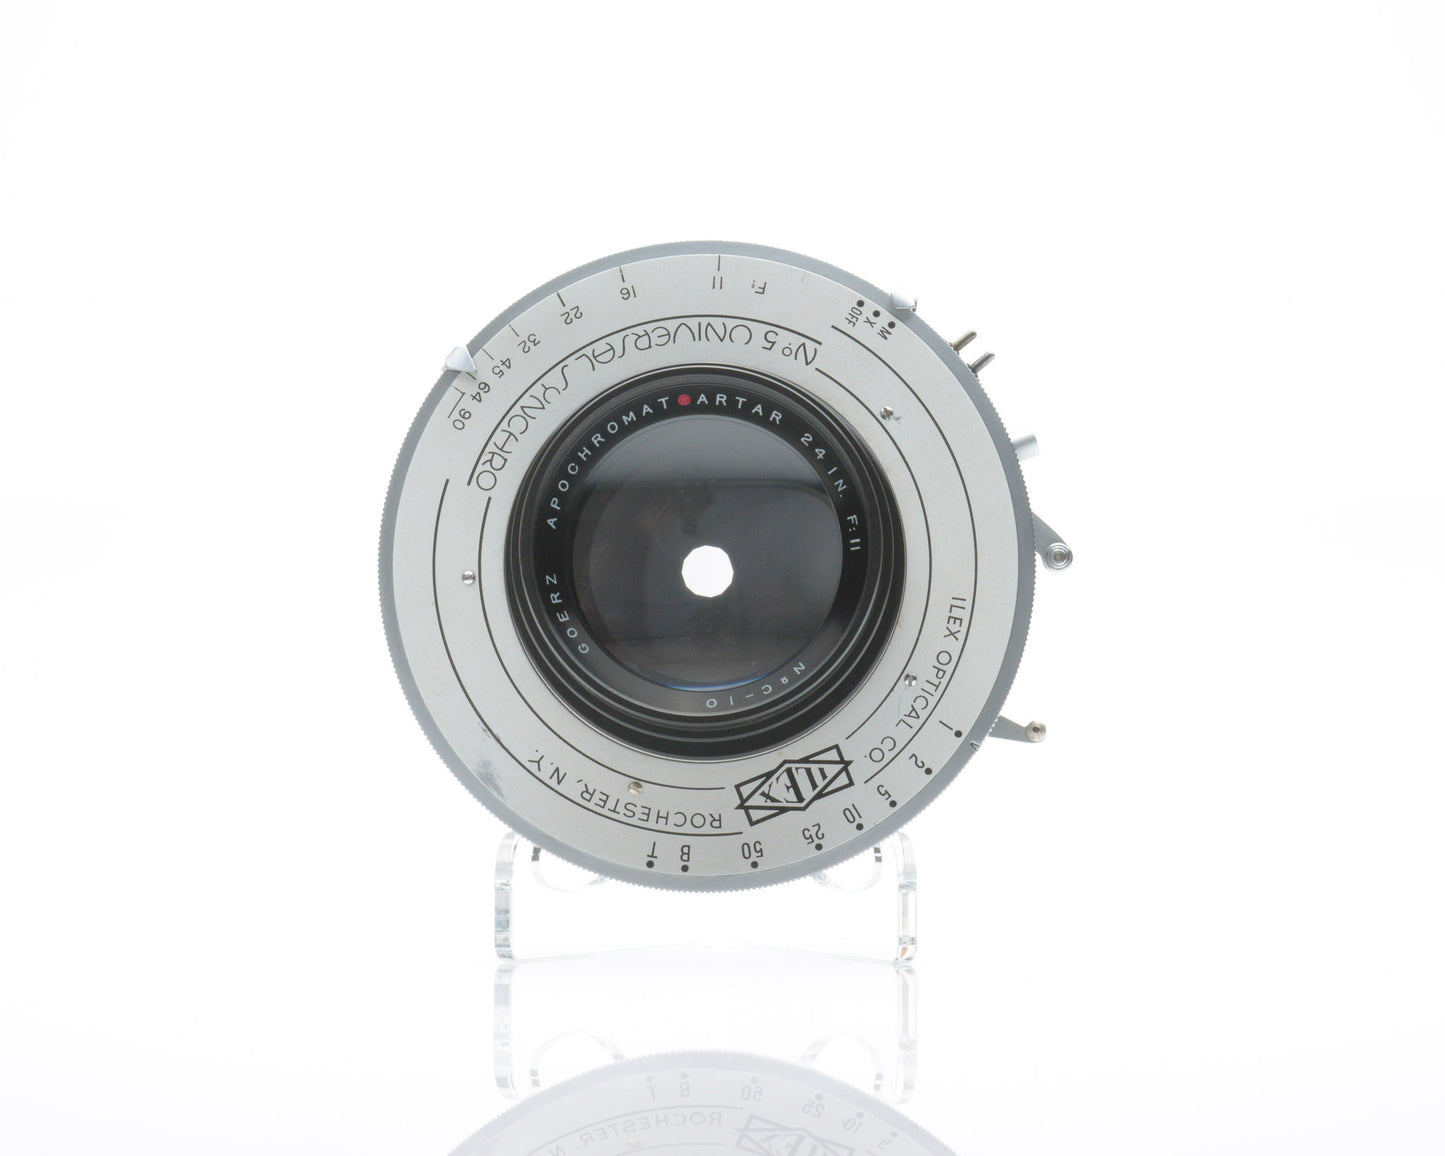 Goerz Apochromat Red Dot Artar 24 In F 11 Ilex Shutter Large Format Camera Lens